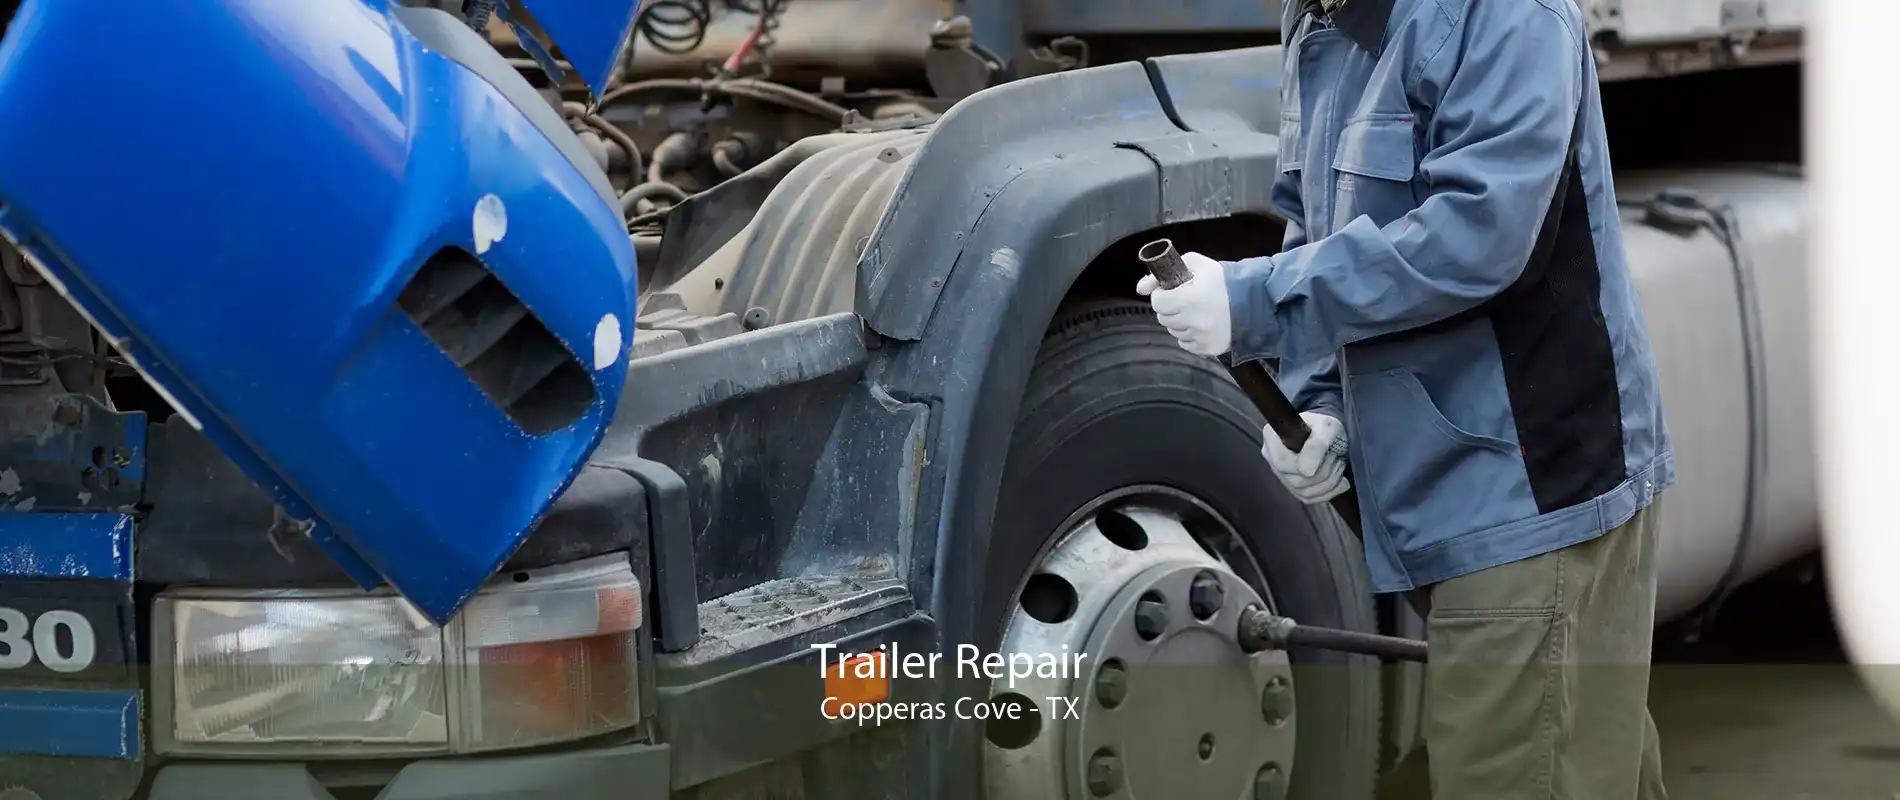 Trailer Repair Copperas Cove - TX